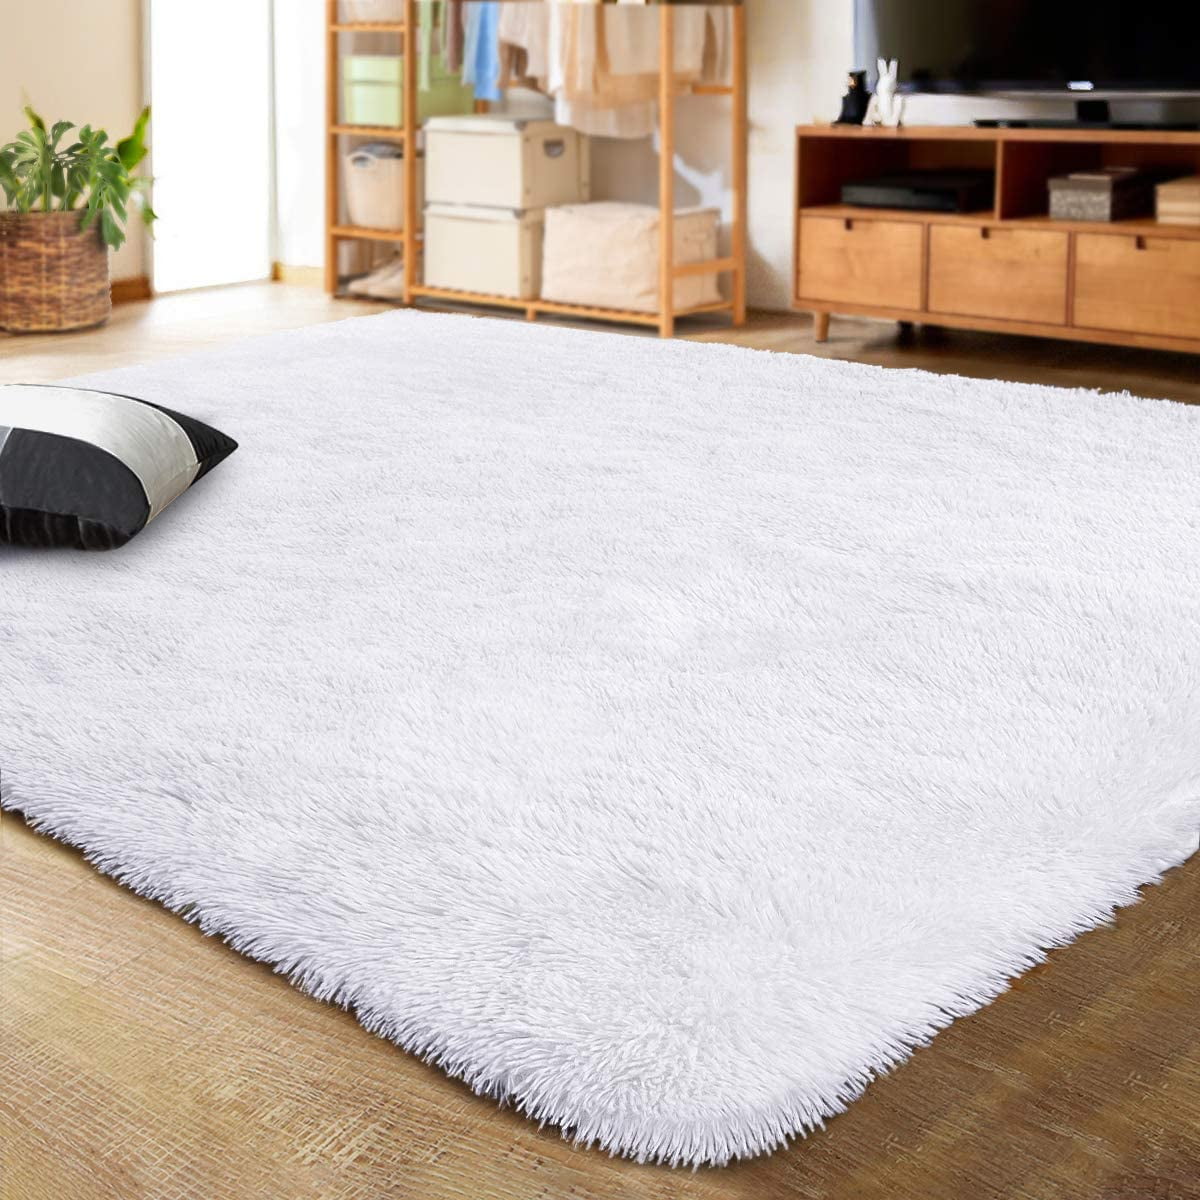 Luxury Fluffy Rug Ultra Soft Shag Carpet For Bedroom Living Room Big Area  Rugs